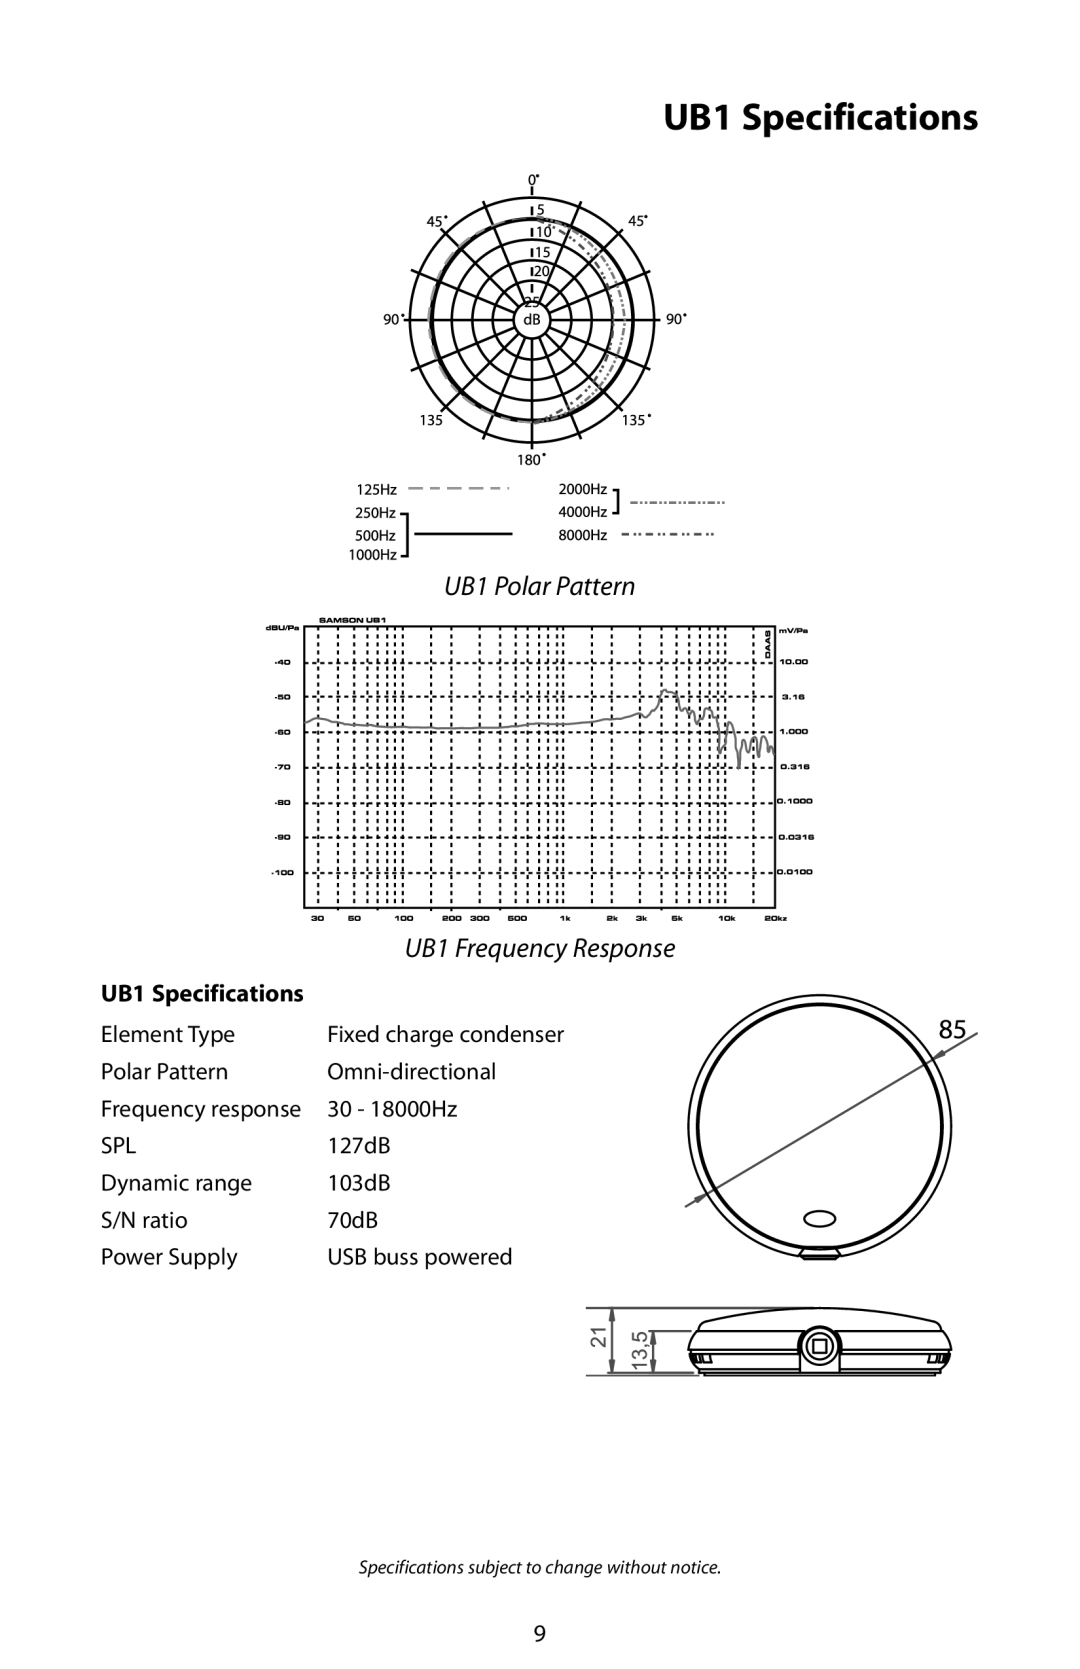 Samson manual UB1 Specifications, UB1 Polar Pattern 